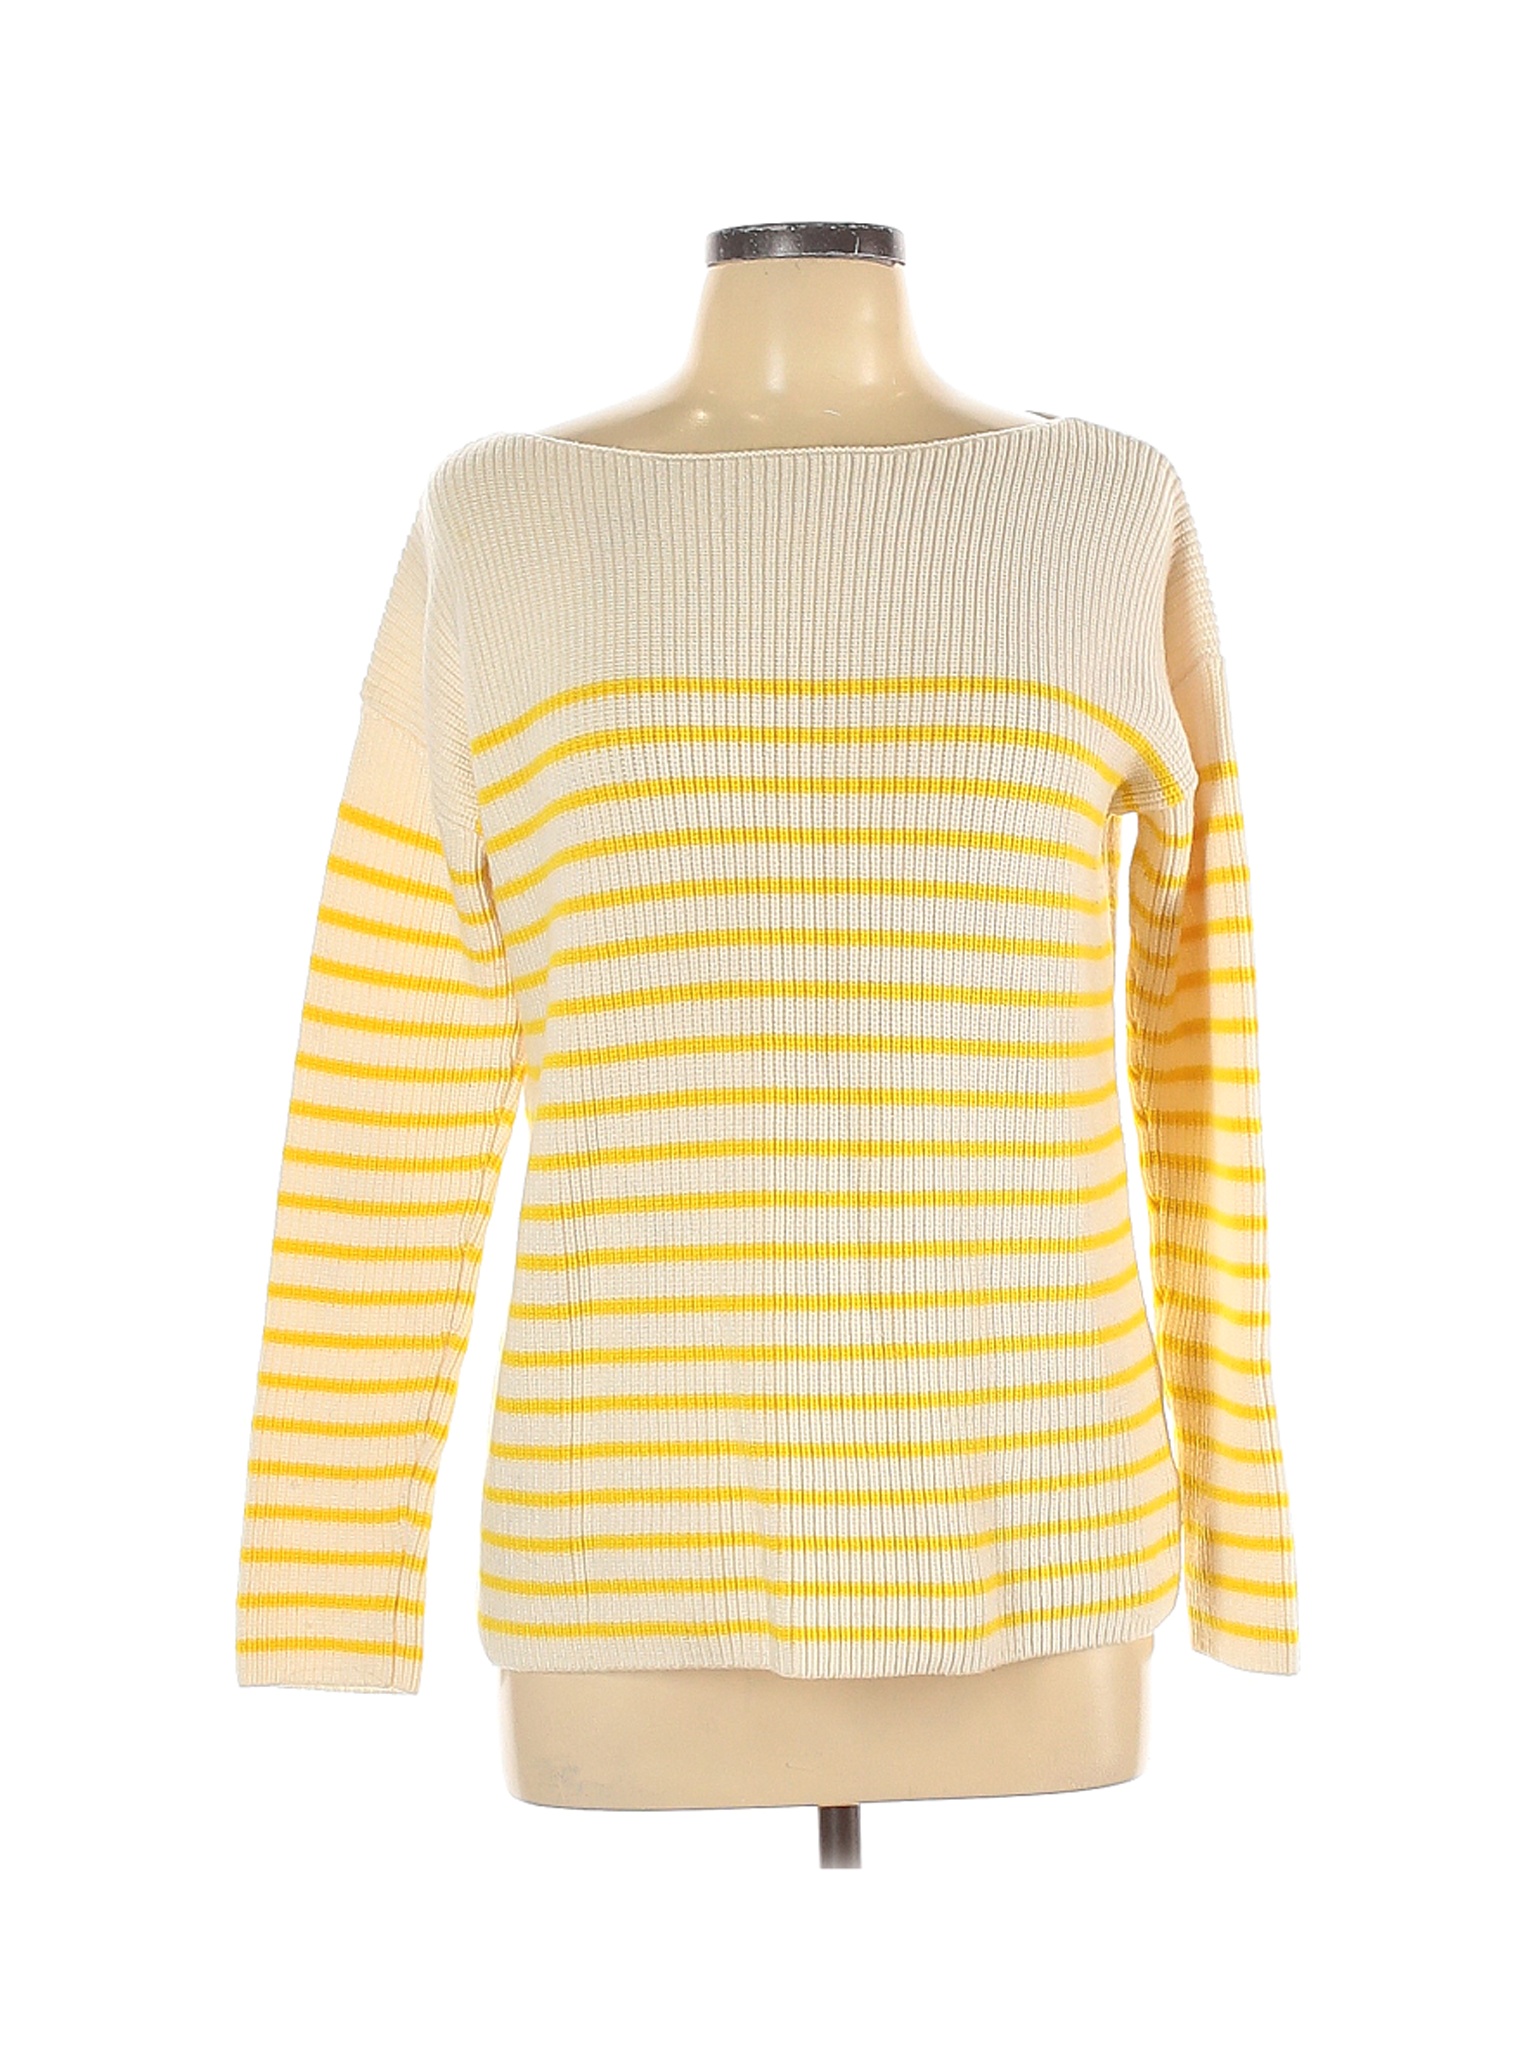 Gap Women Yellow Pullover Sweater L | eBay